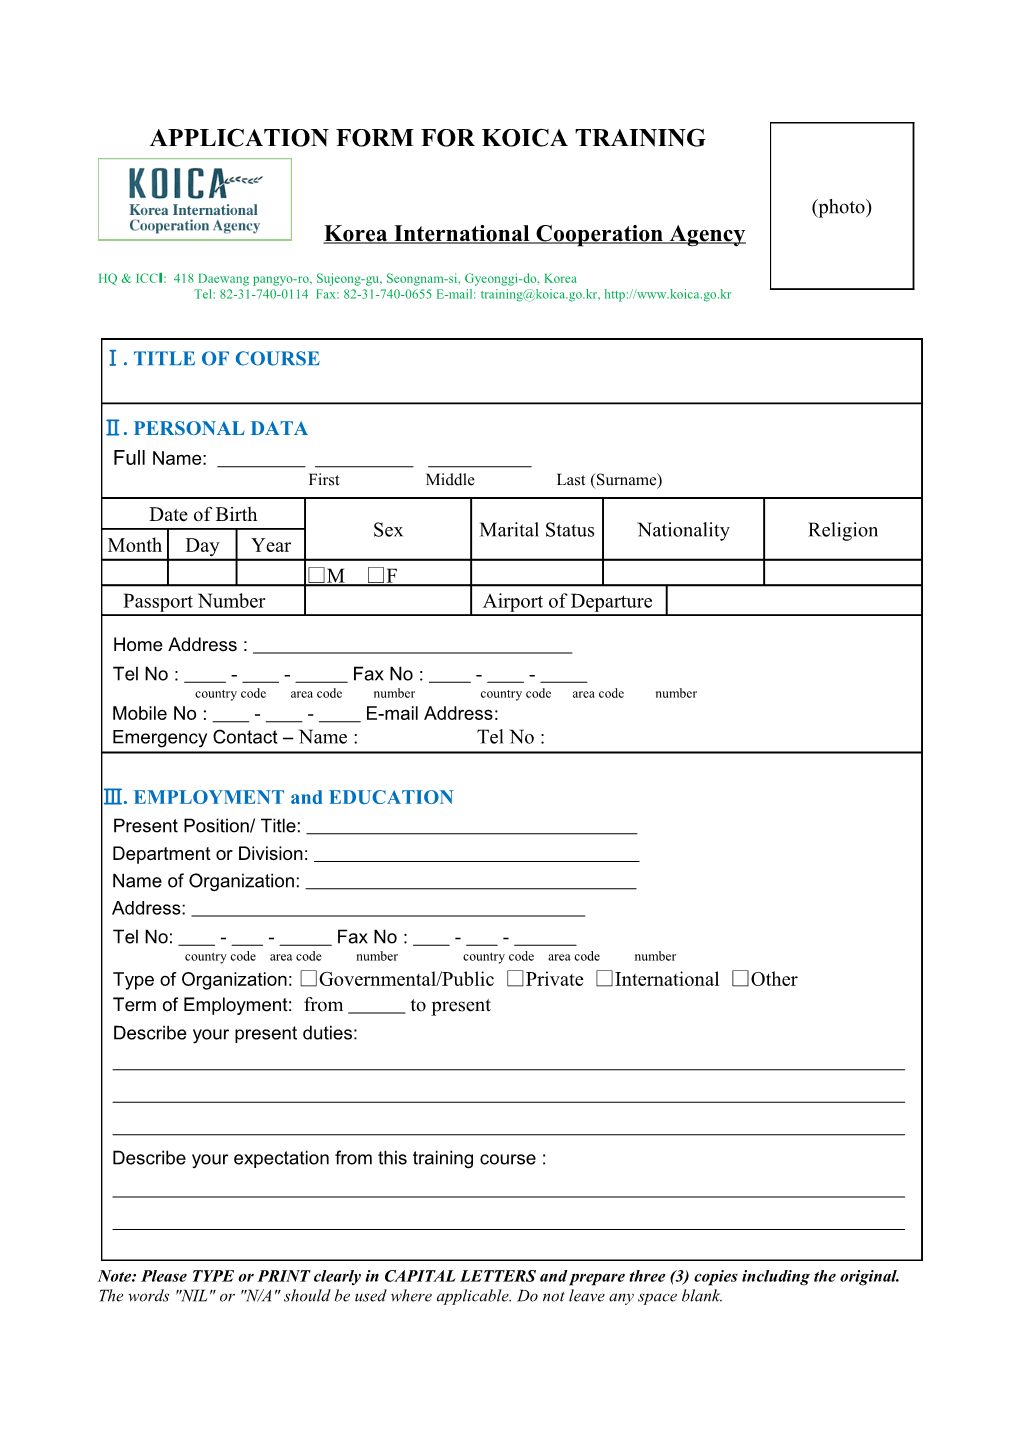 Application Form for KOICA Training Program s1